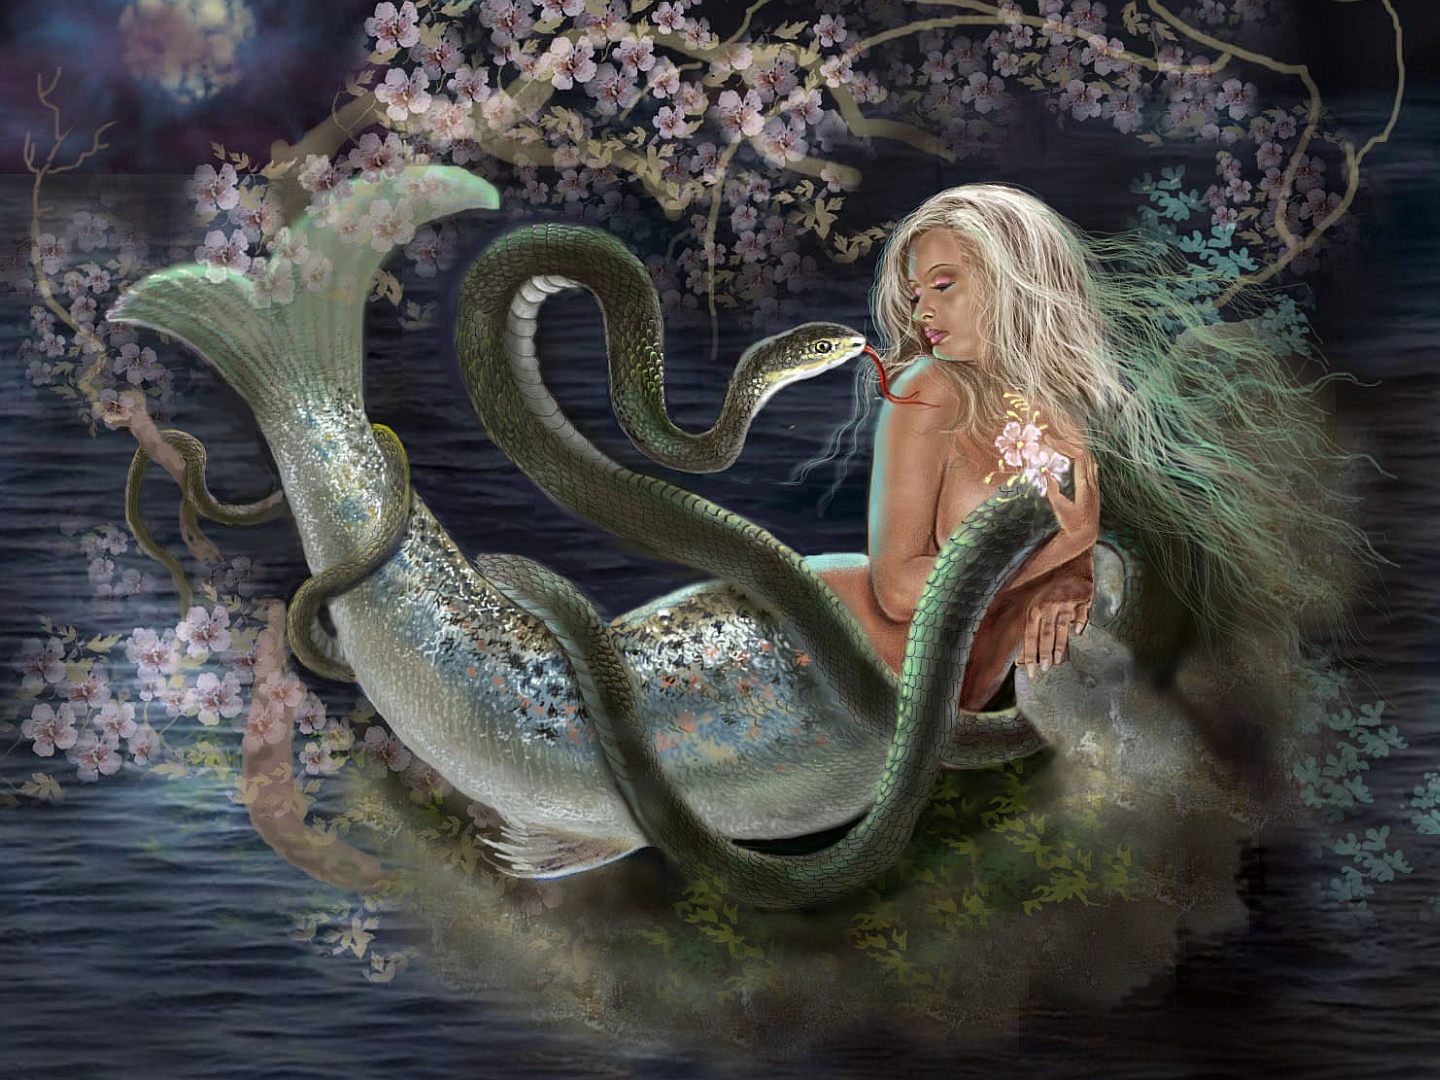 Fantasy Mermaid Wallpaper